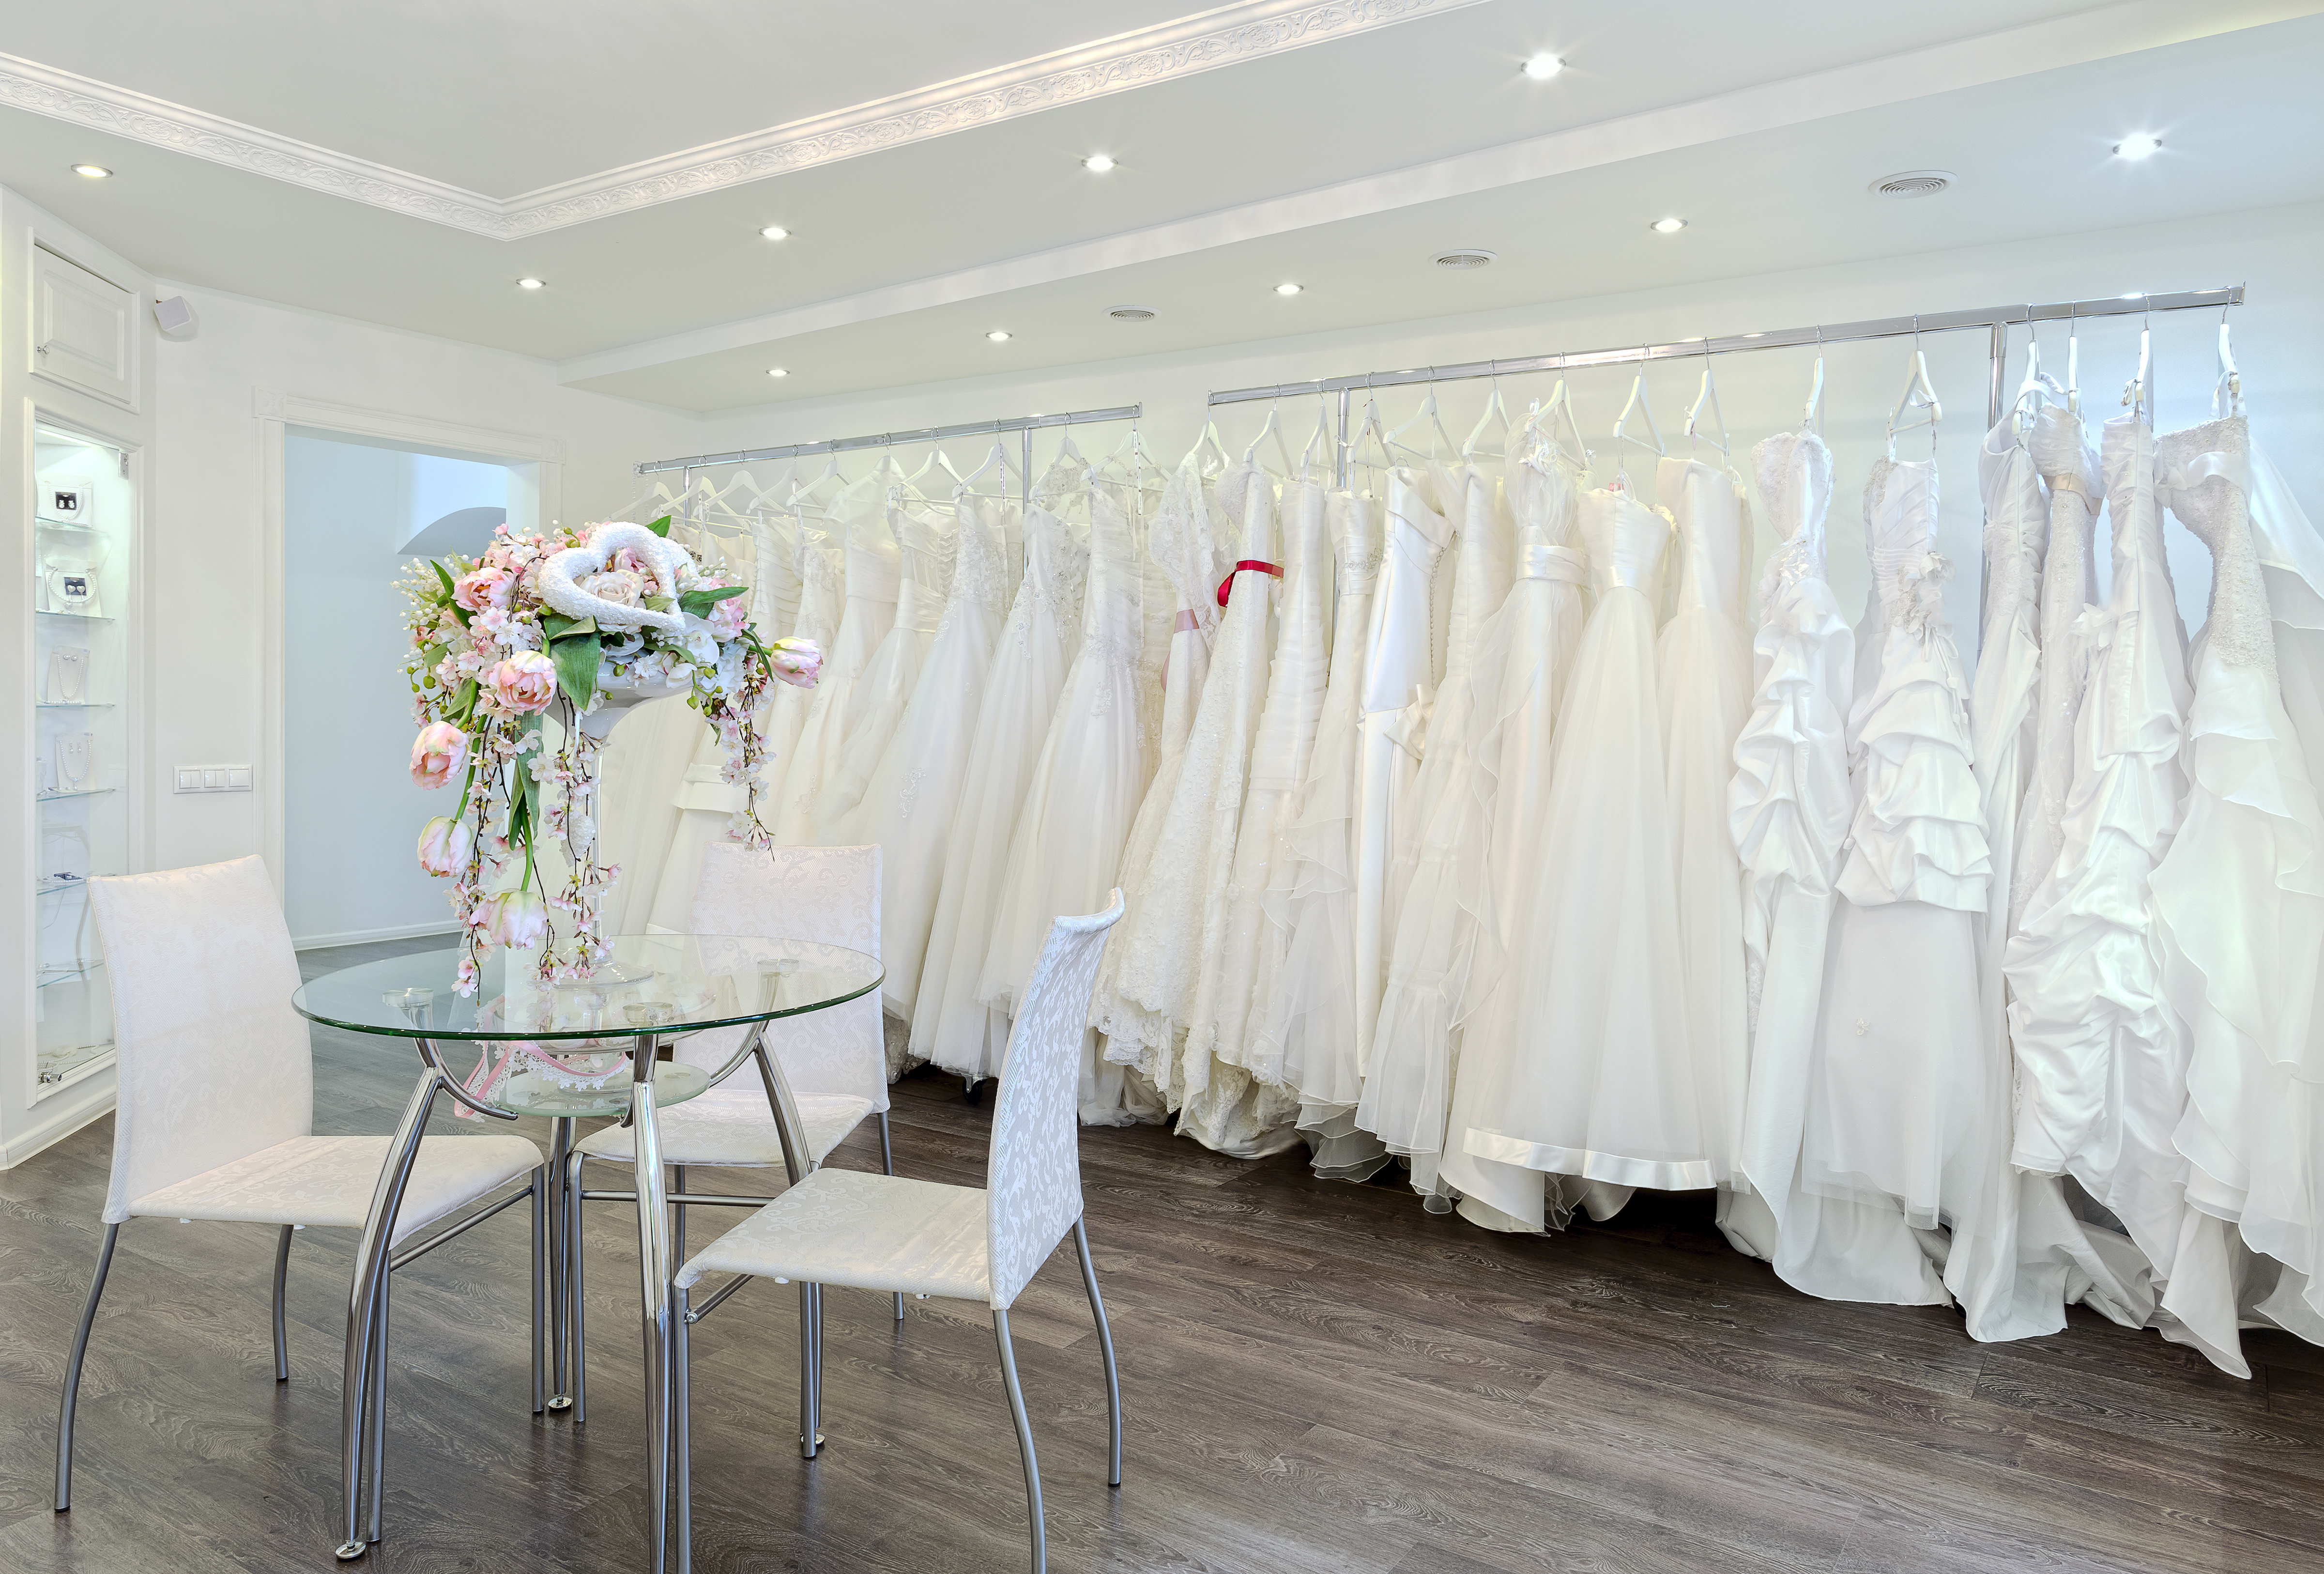 A bridal store | Source: Shutterstock